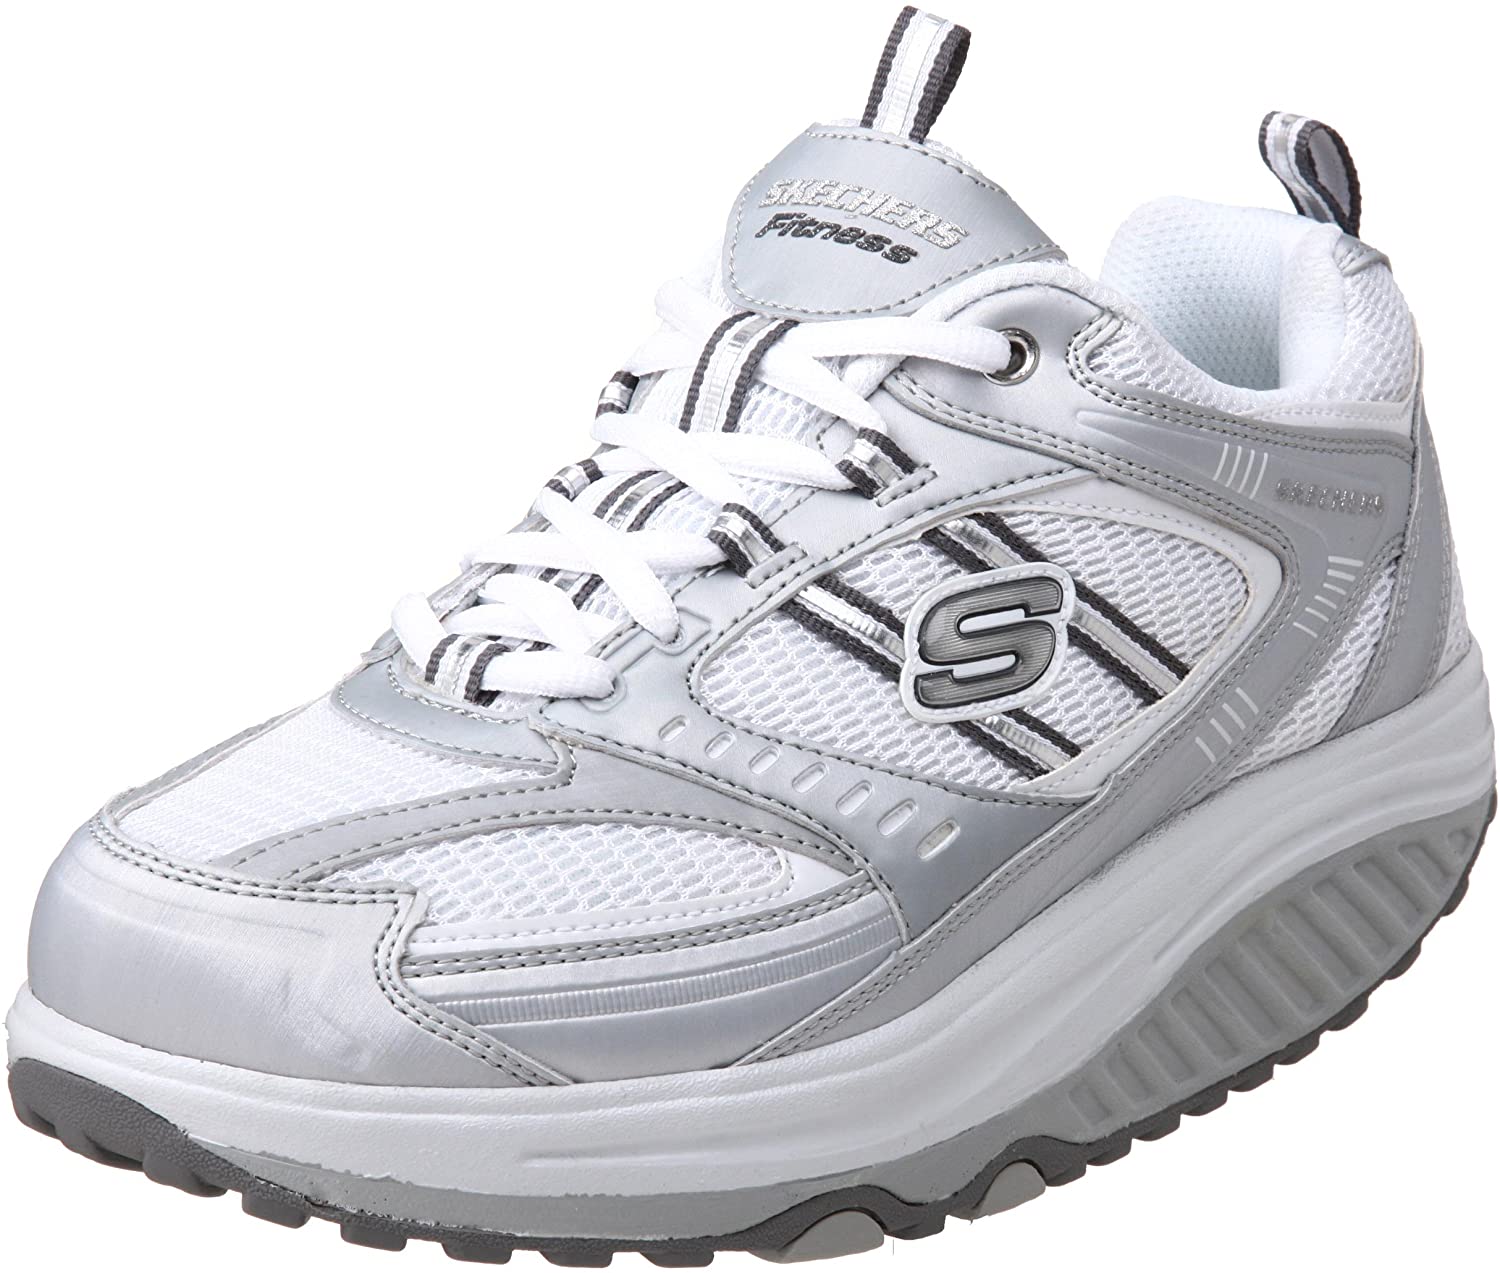 Skechers Shape Ups 11803 Womens SZ 7.5 med Shoes Walking Toning White Silver